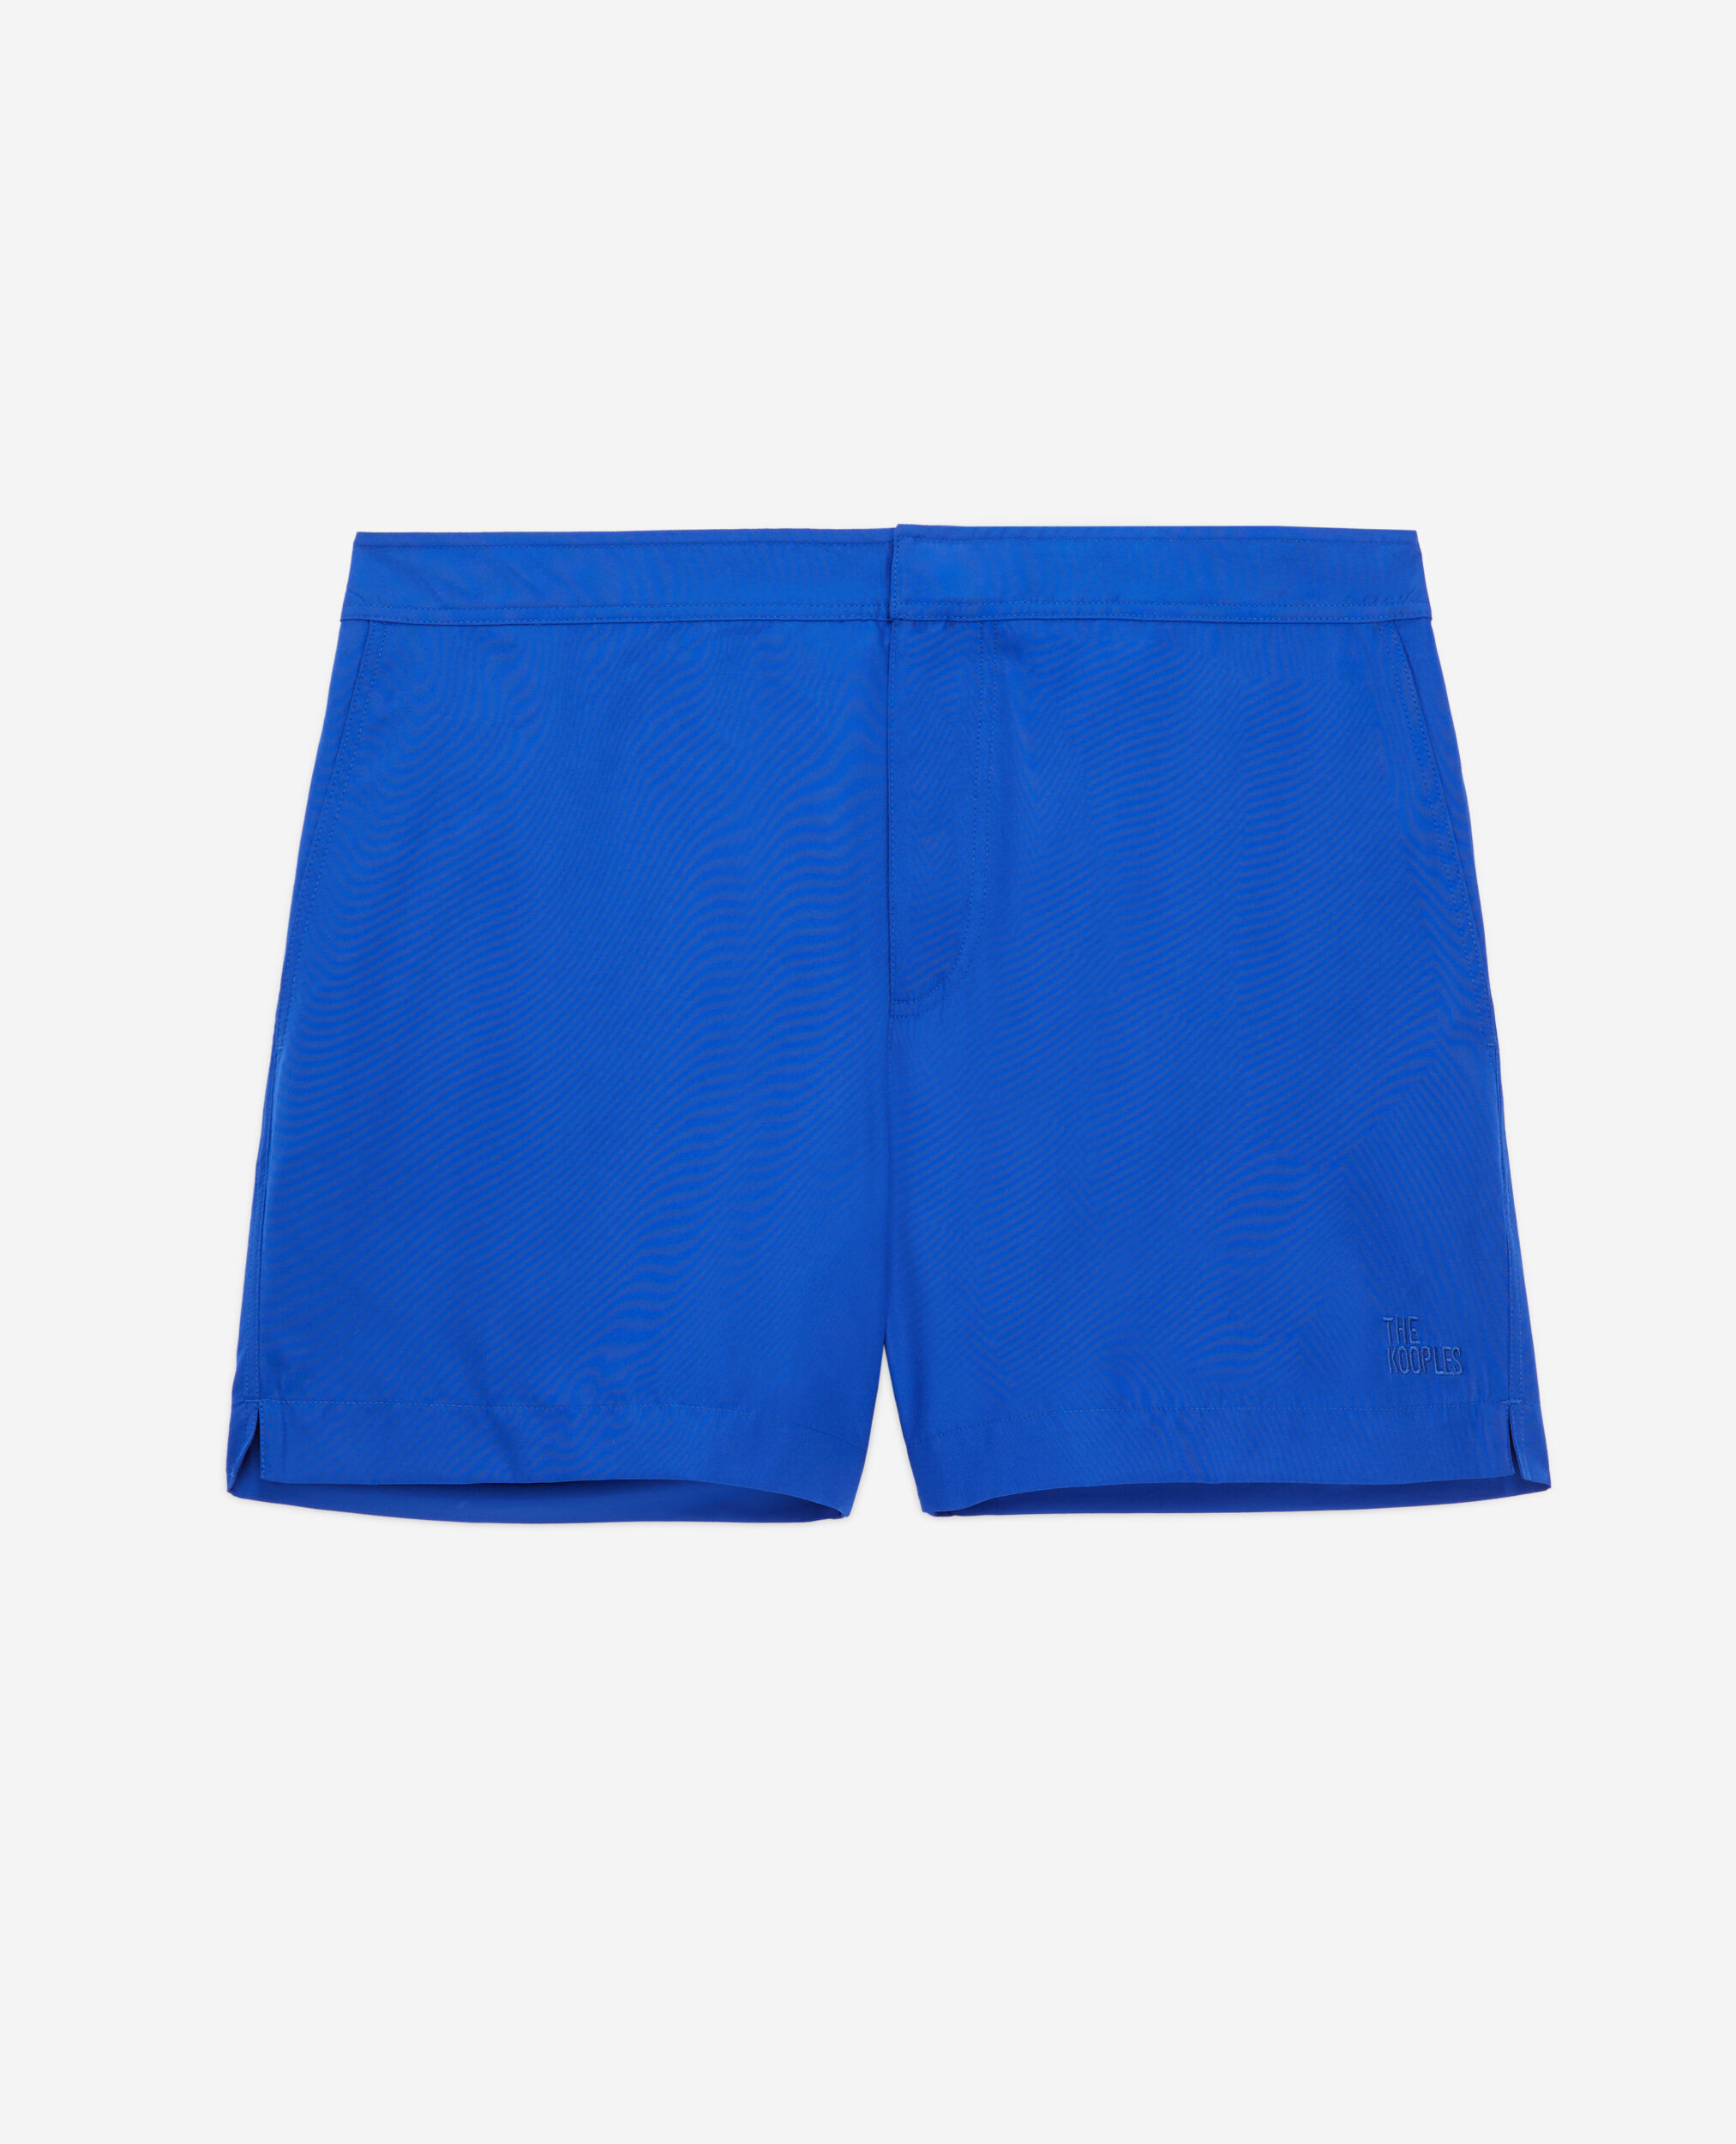 Blue swim shorts with logo, BLUE, hi-res image number null